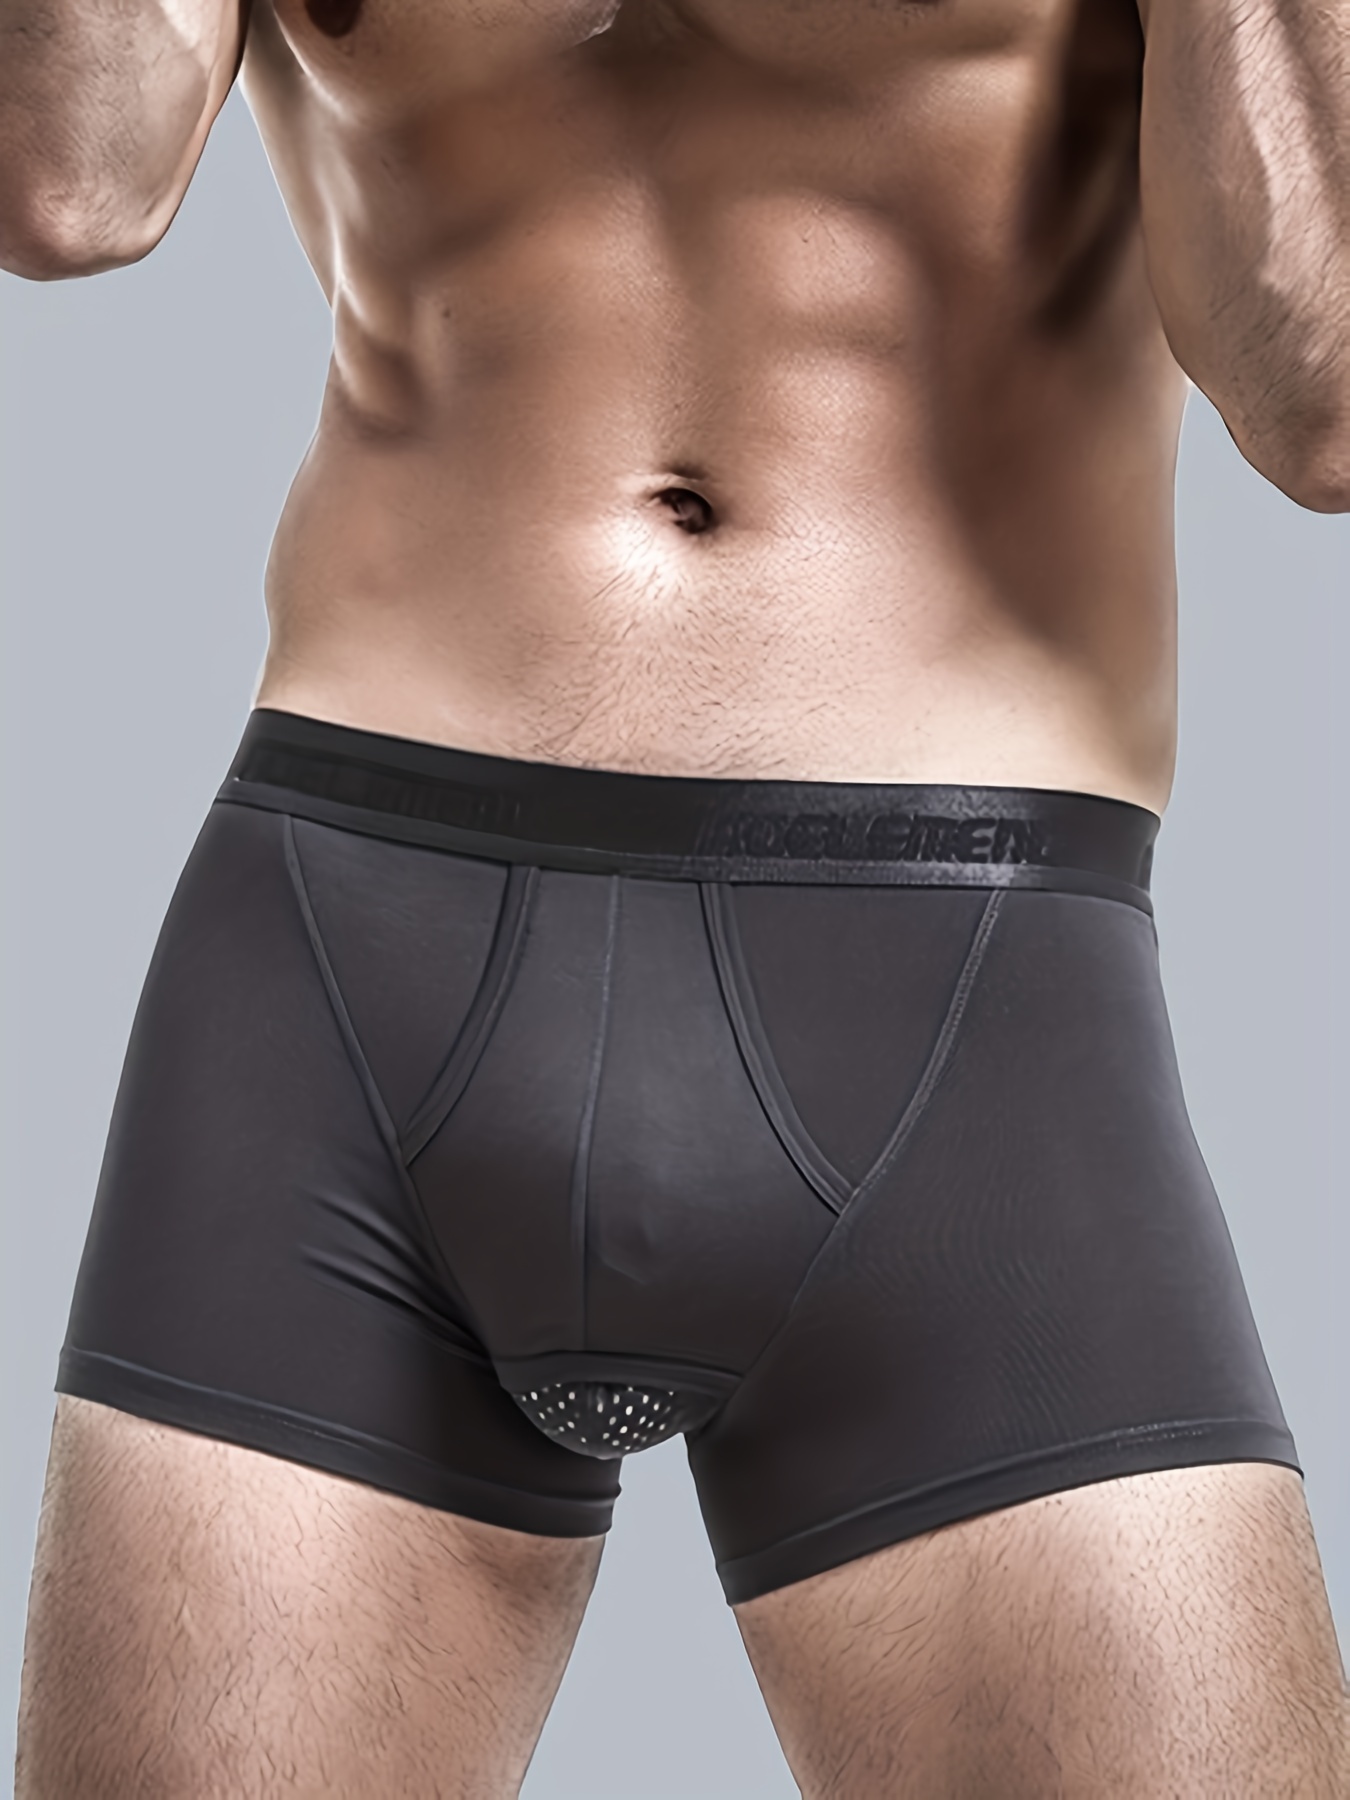 Faringoto Mens Elephant Underwear Boxer Bulge Pouch Male Panties Ice Silk  Shorts Underpants S-XL Black : : Clothing, Shoes & Accessories